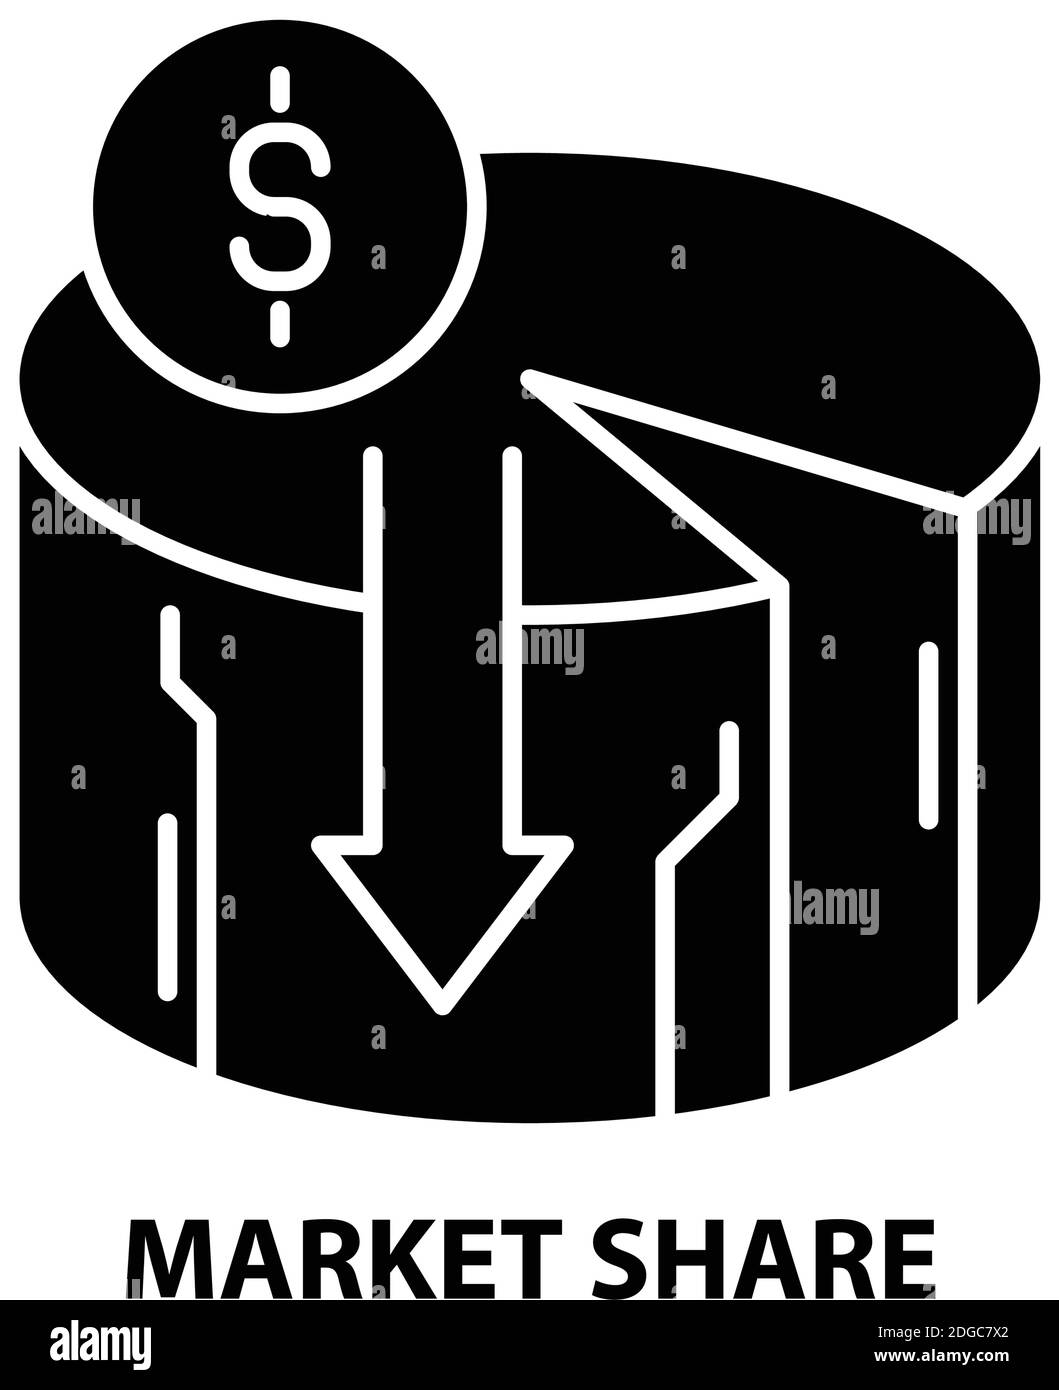 market share symbol icon, black vector sign with editable strokes, concept illustration Stock Vector